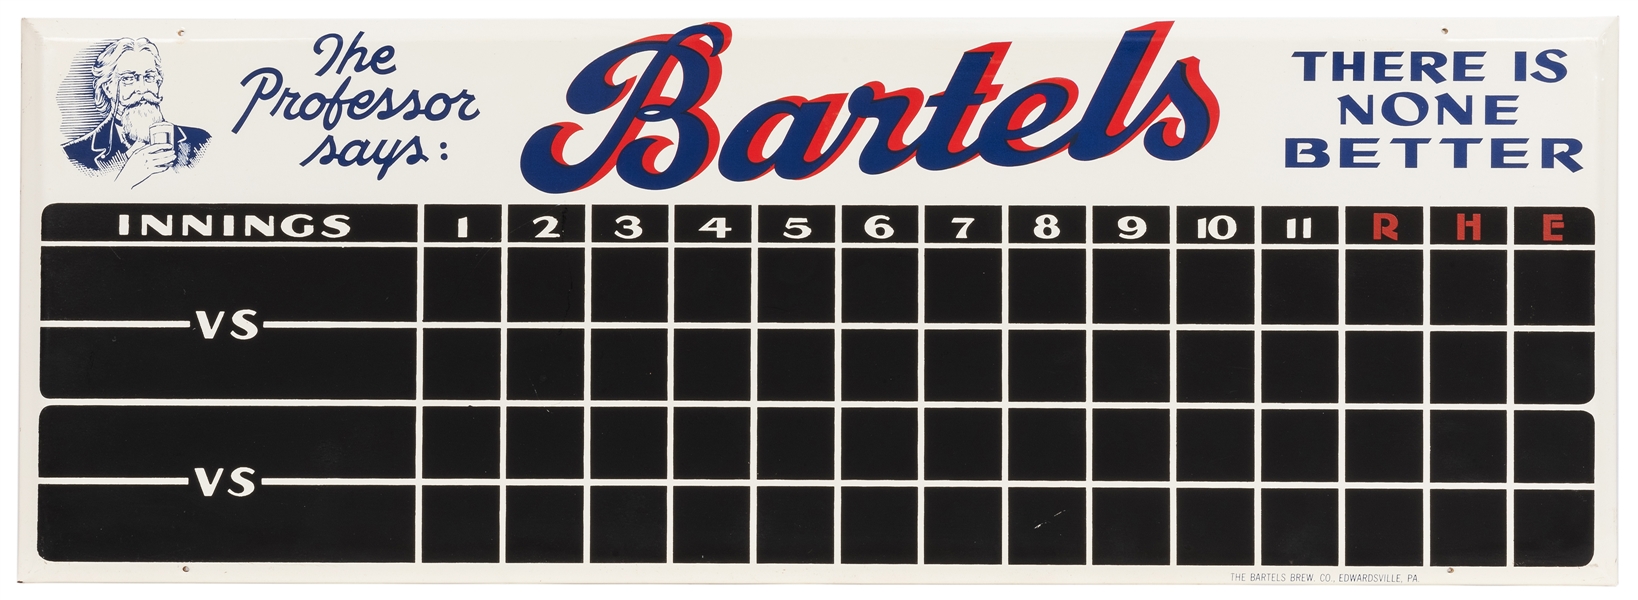 Bartels Beer Scoreboard Sign.